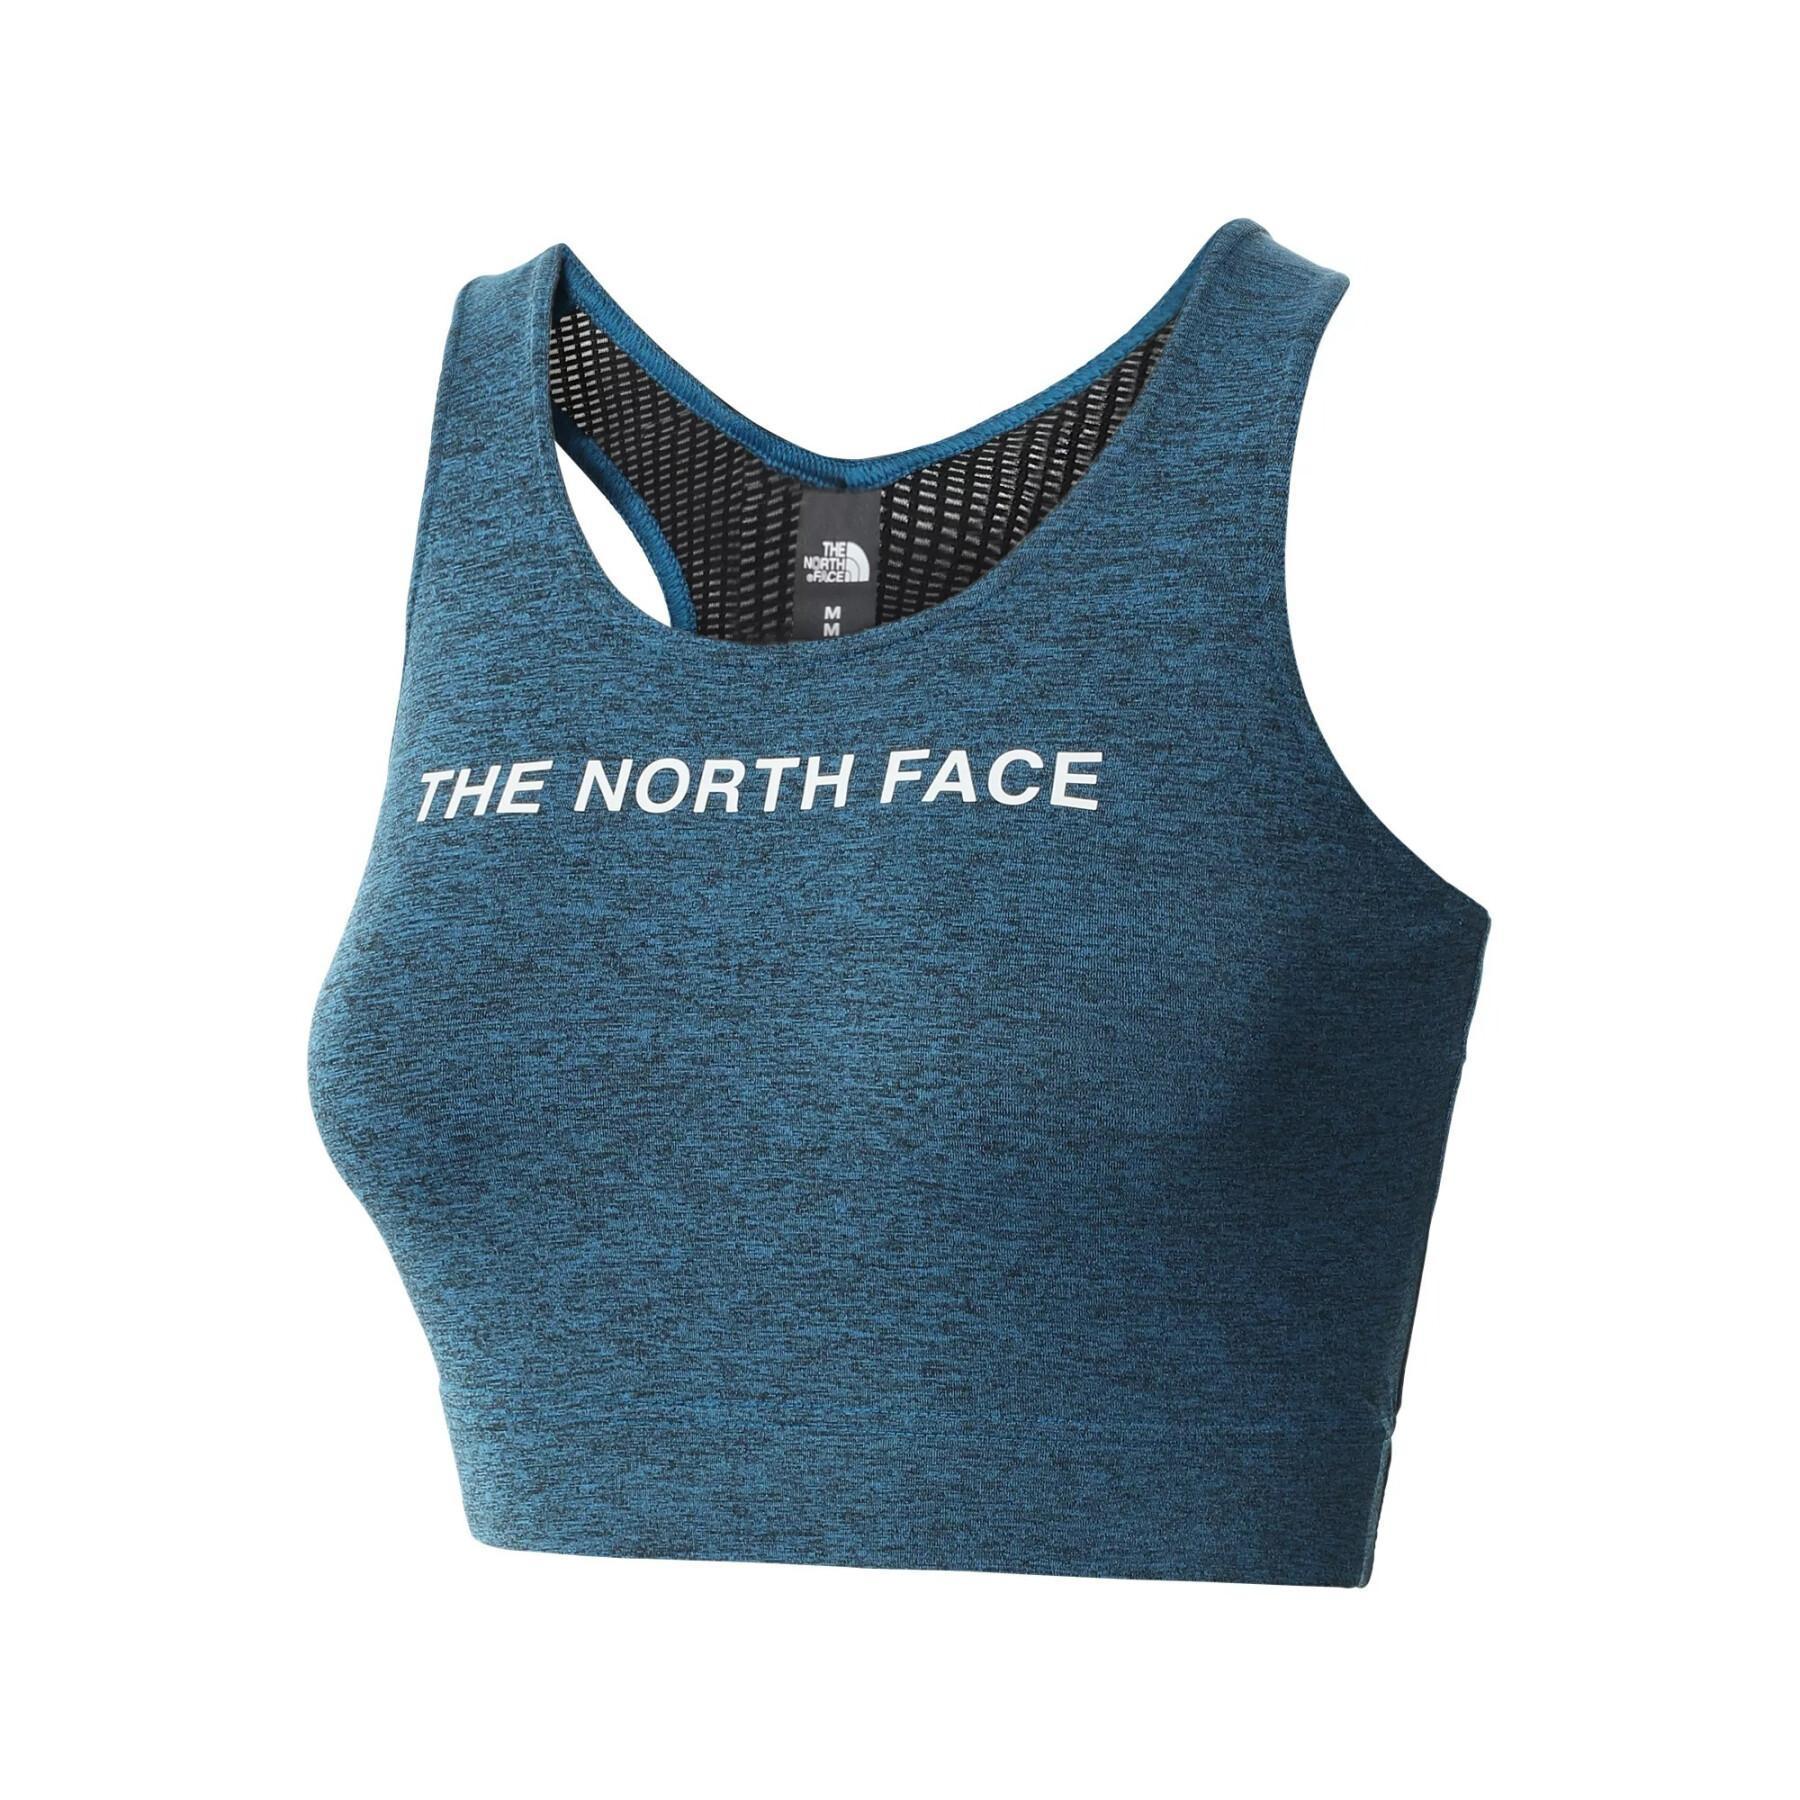 Women's bra The North Face - Underwear - Clothing - Women